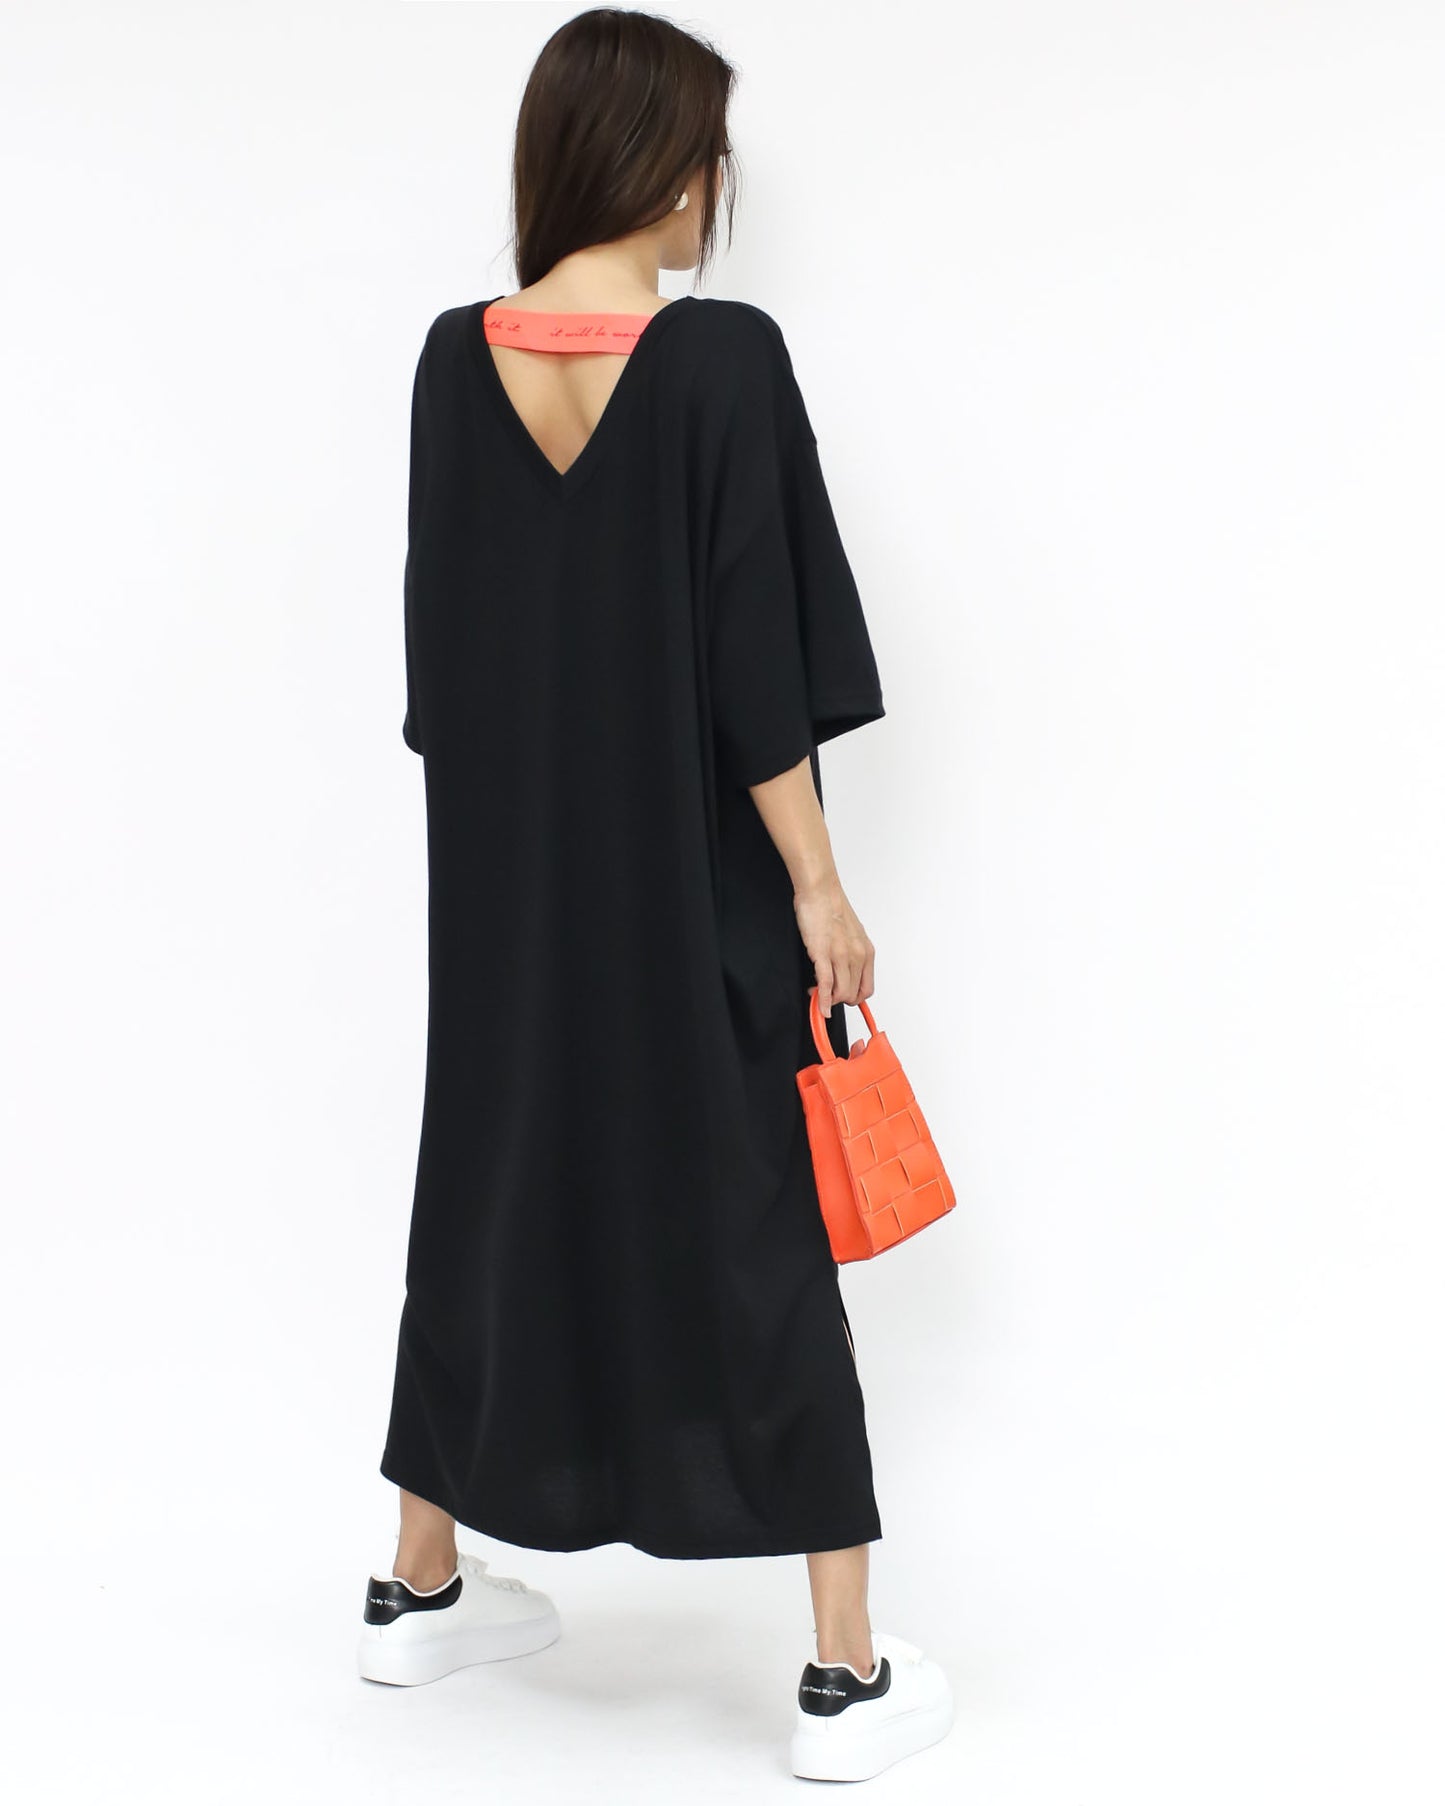 black tee longline dress w/ orange strap back *pre-order*